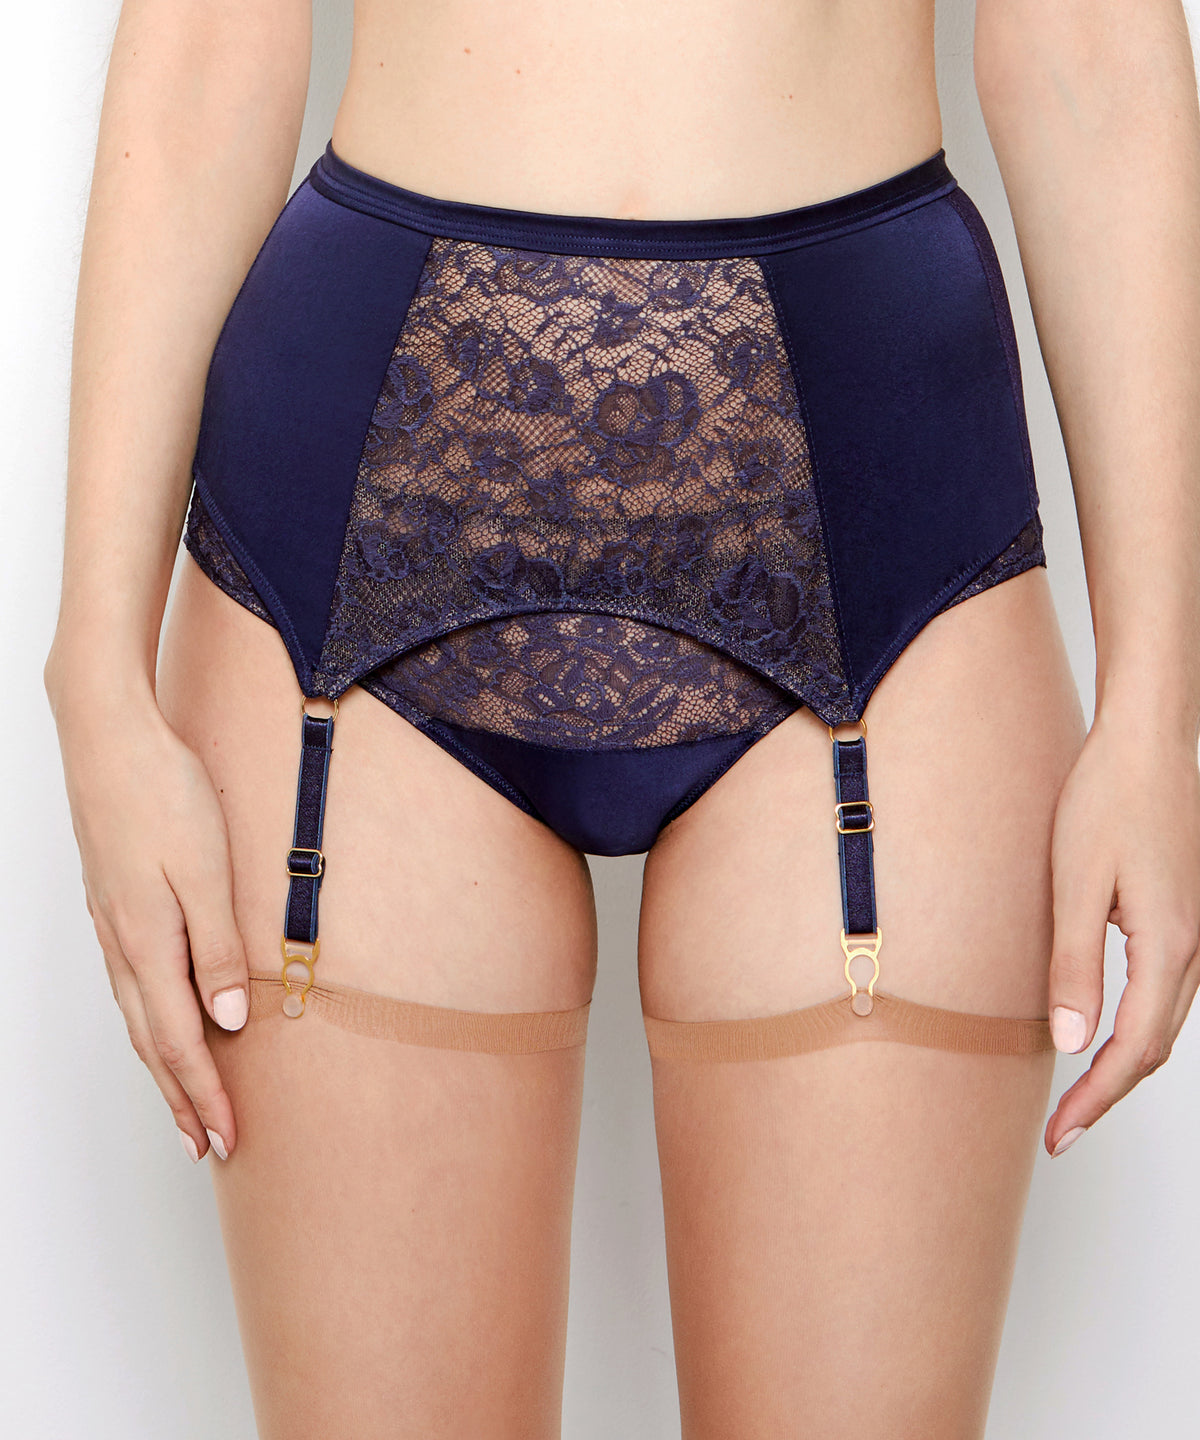 Buy Black Lace Suspender Belt from the Next UK online shop